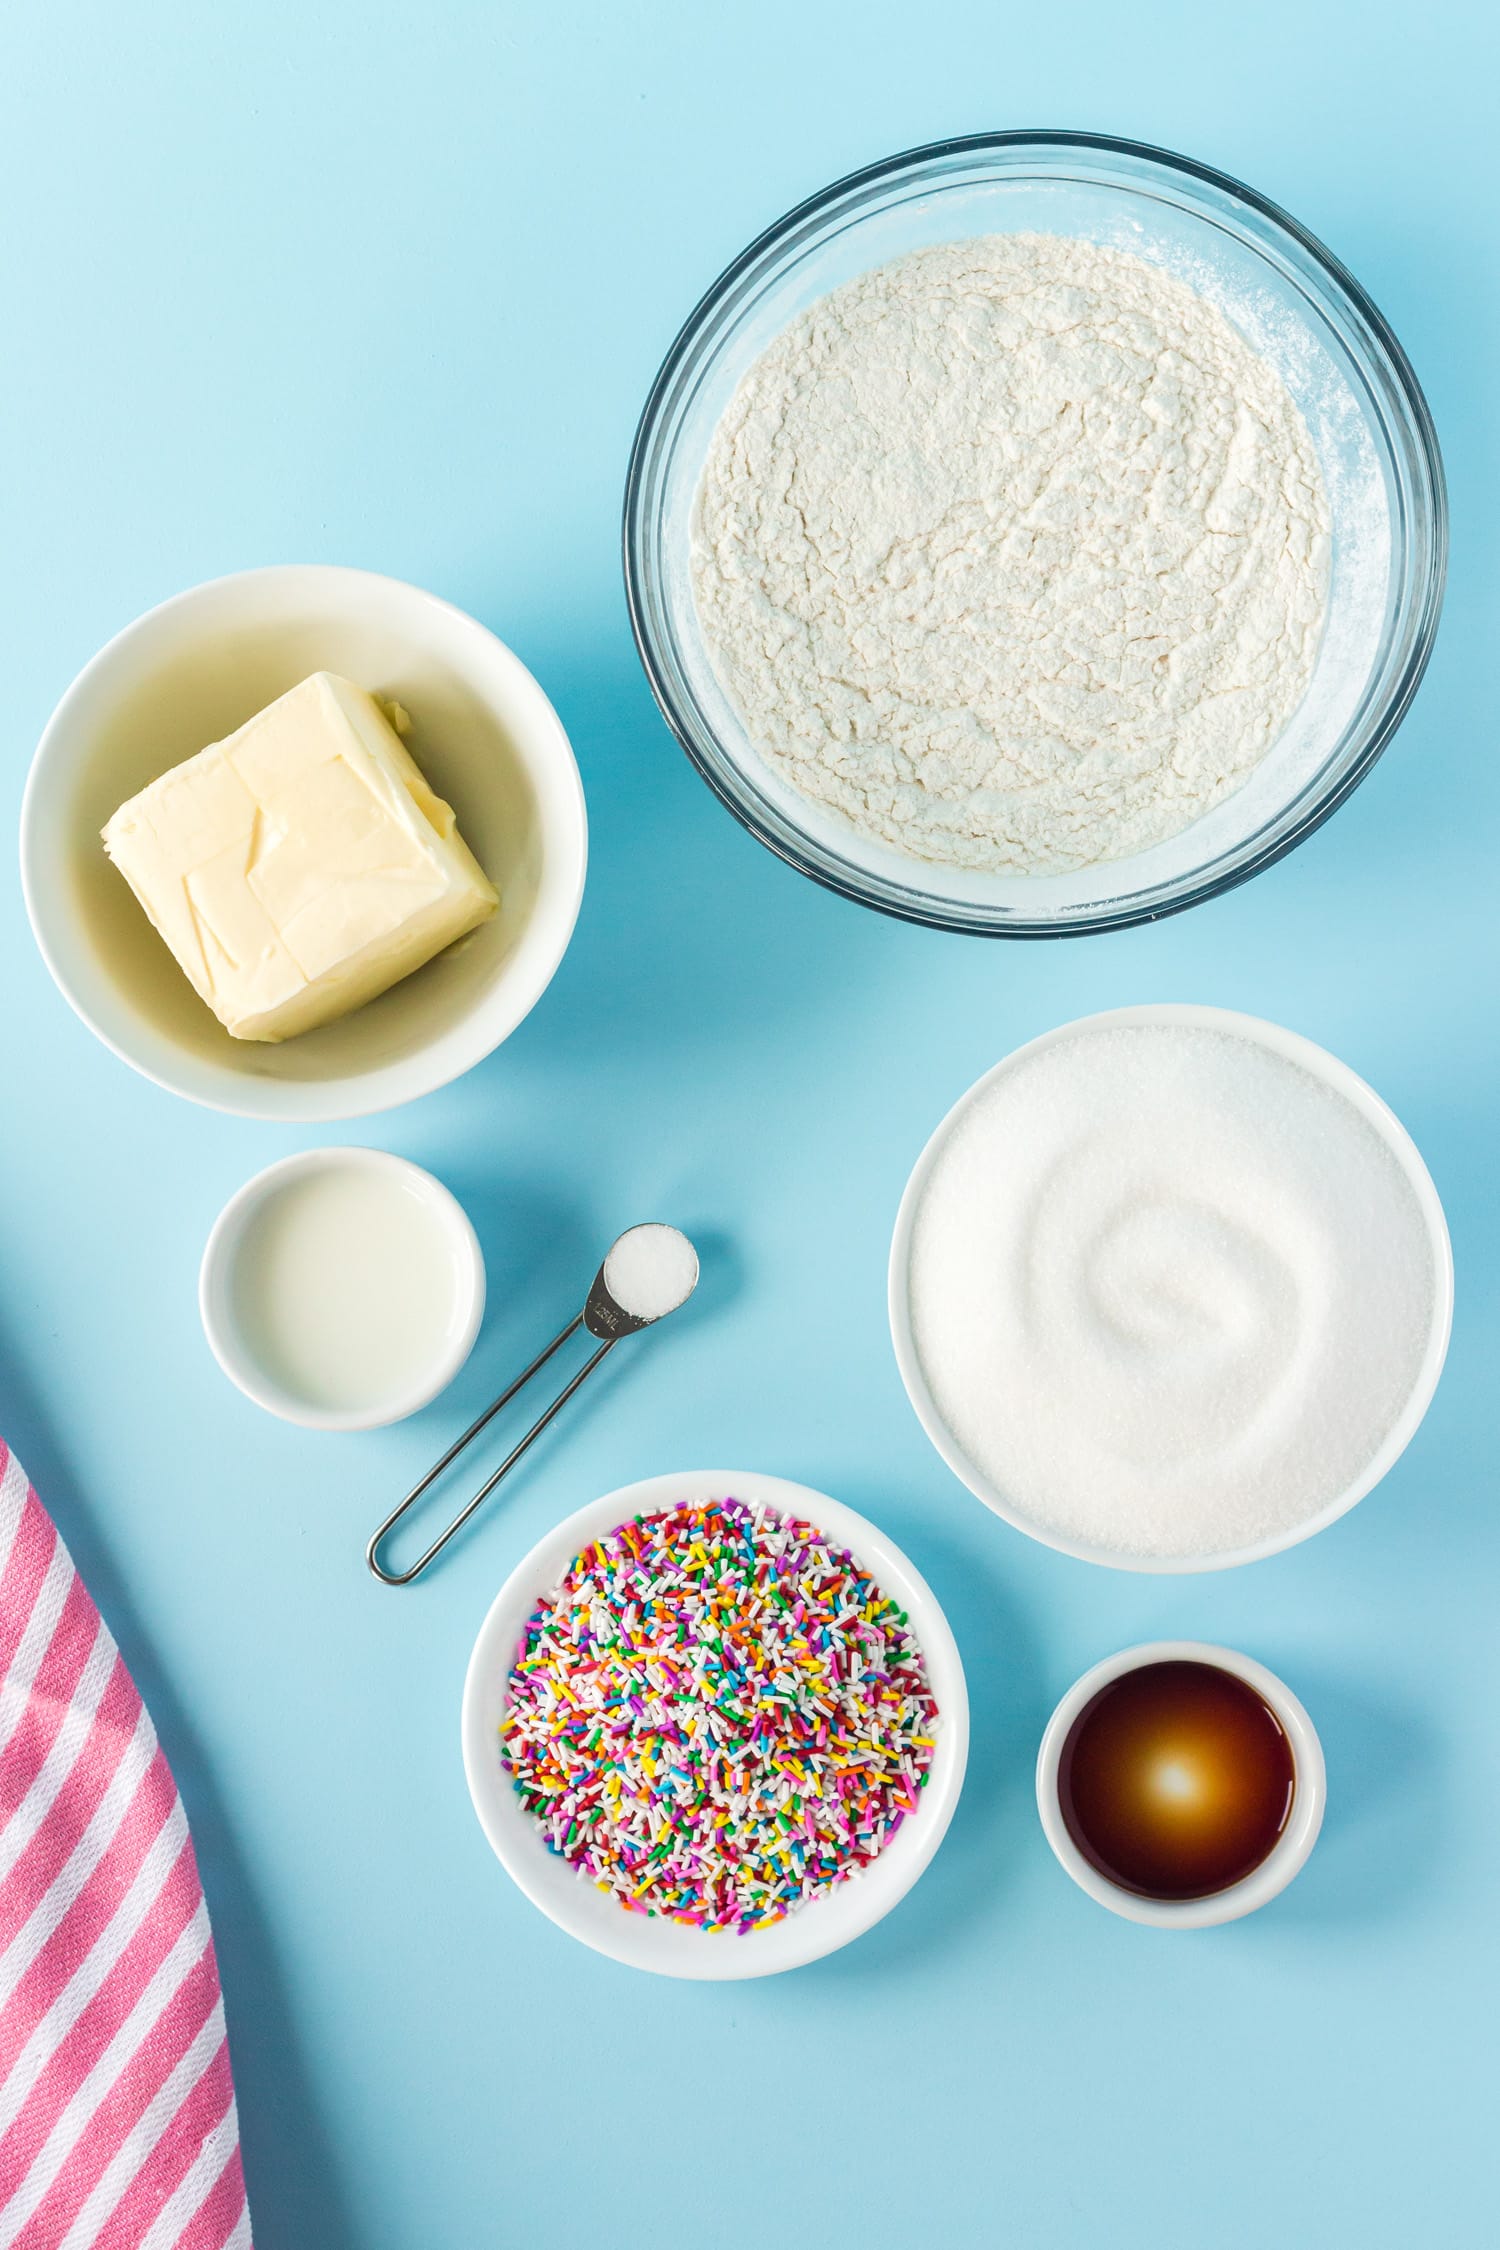 ingredients to make edible cookie dough